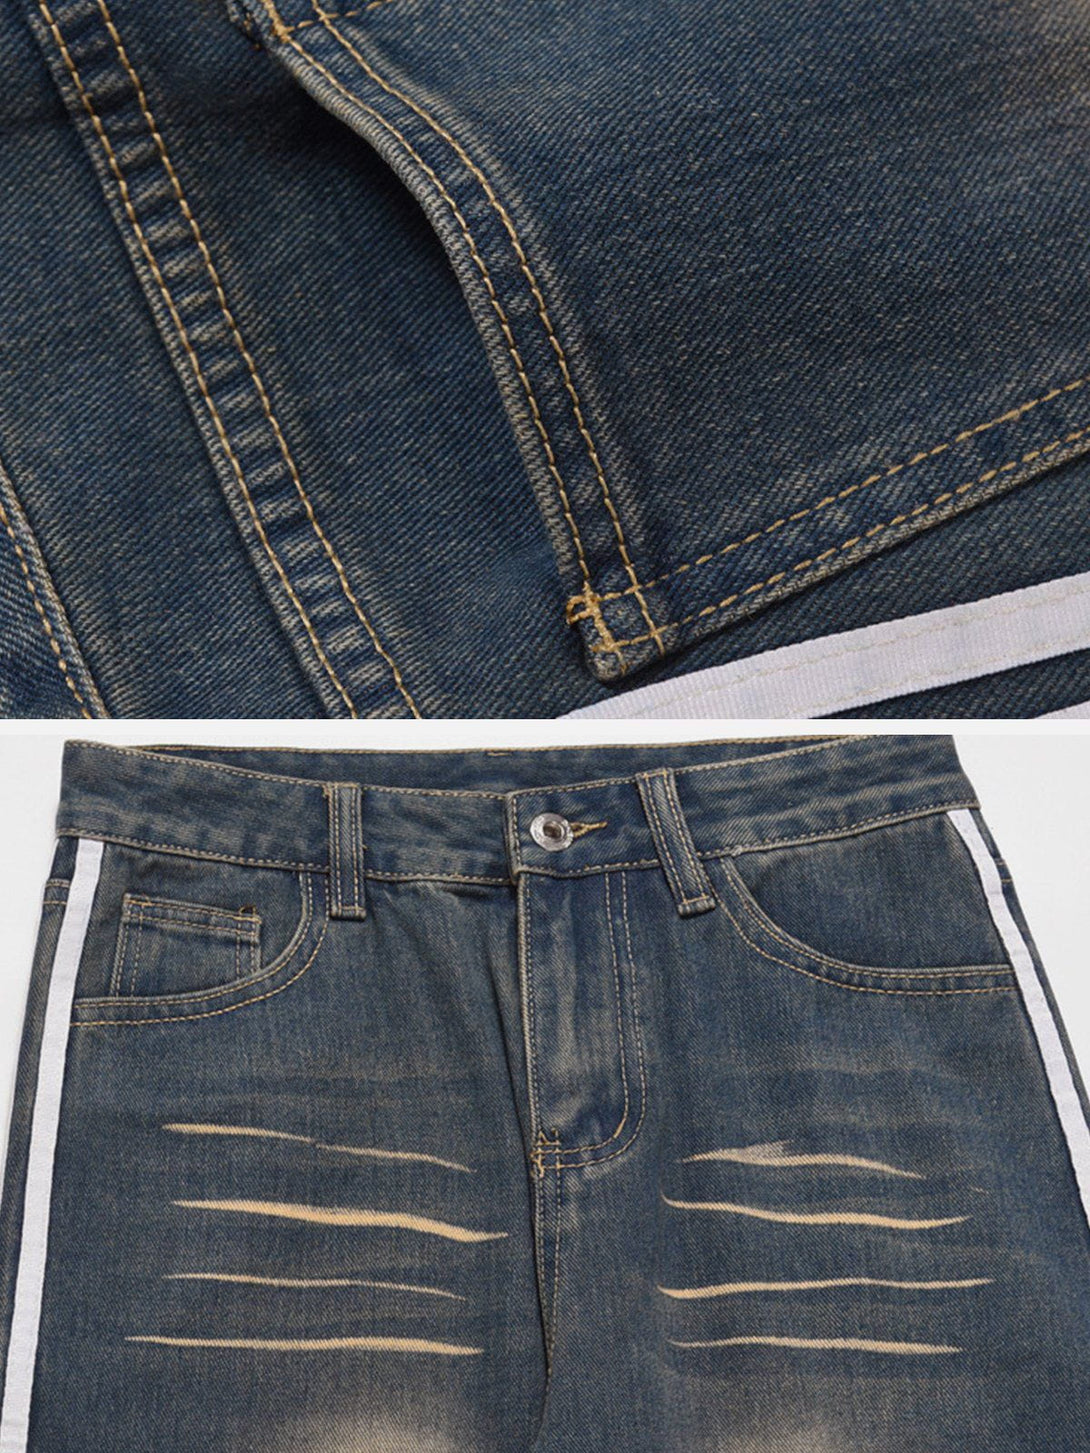 Levefly - Stripe Washed Jeans - Streetwear Fashion - levefly.com